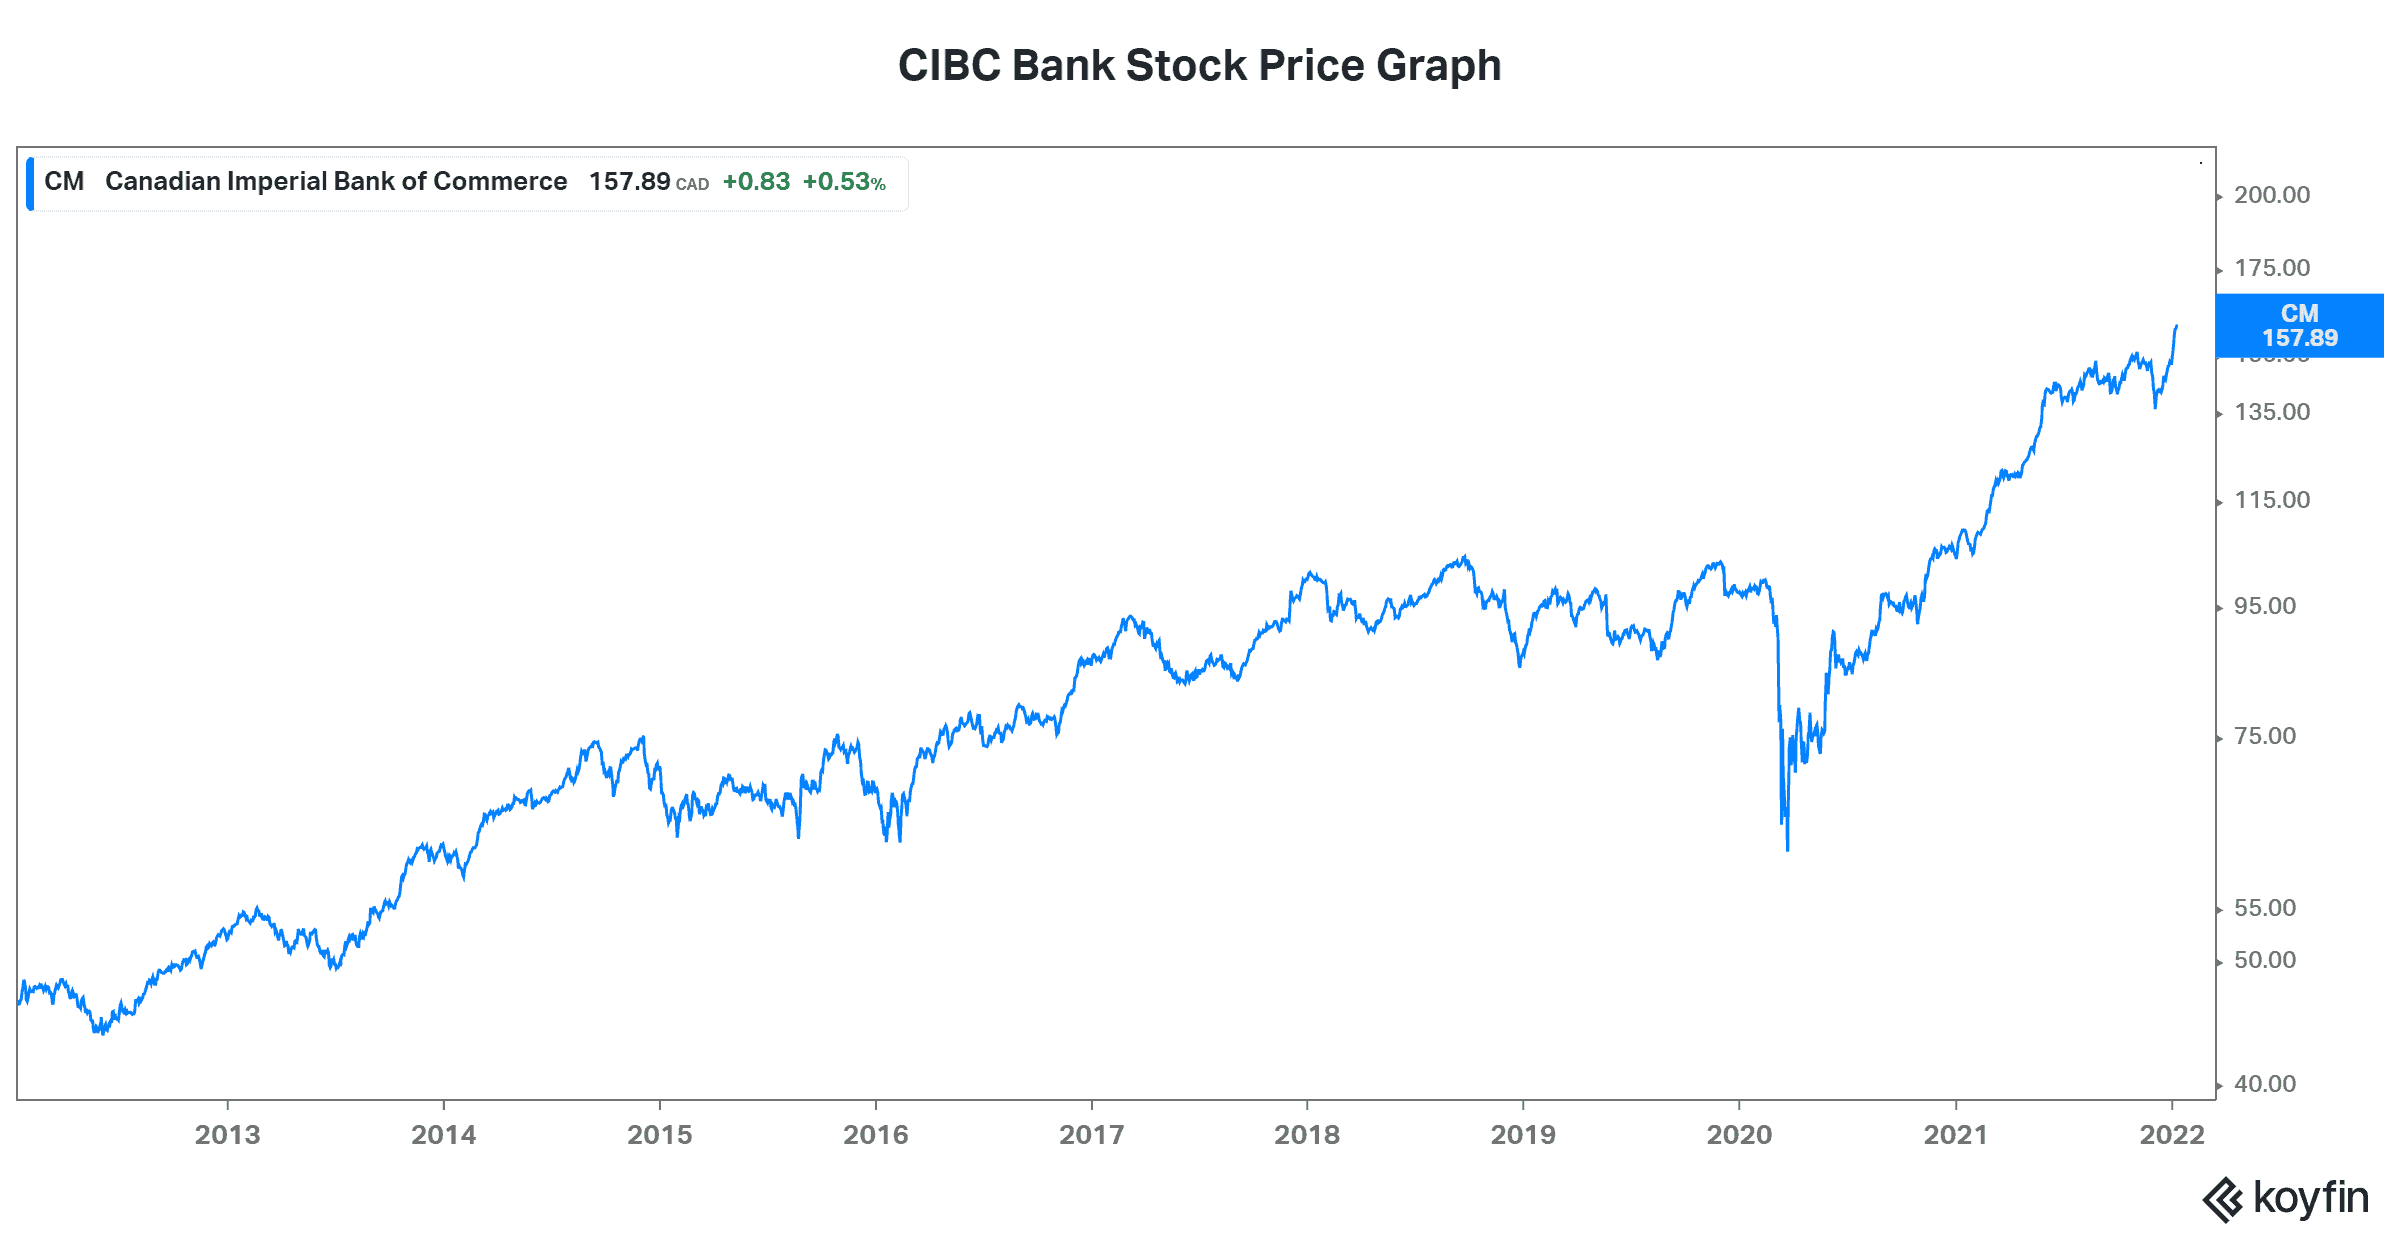 CIBC Bank stock